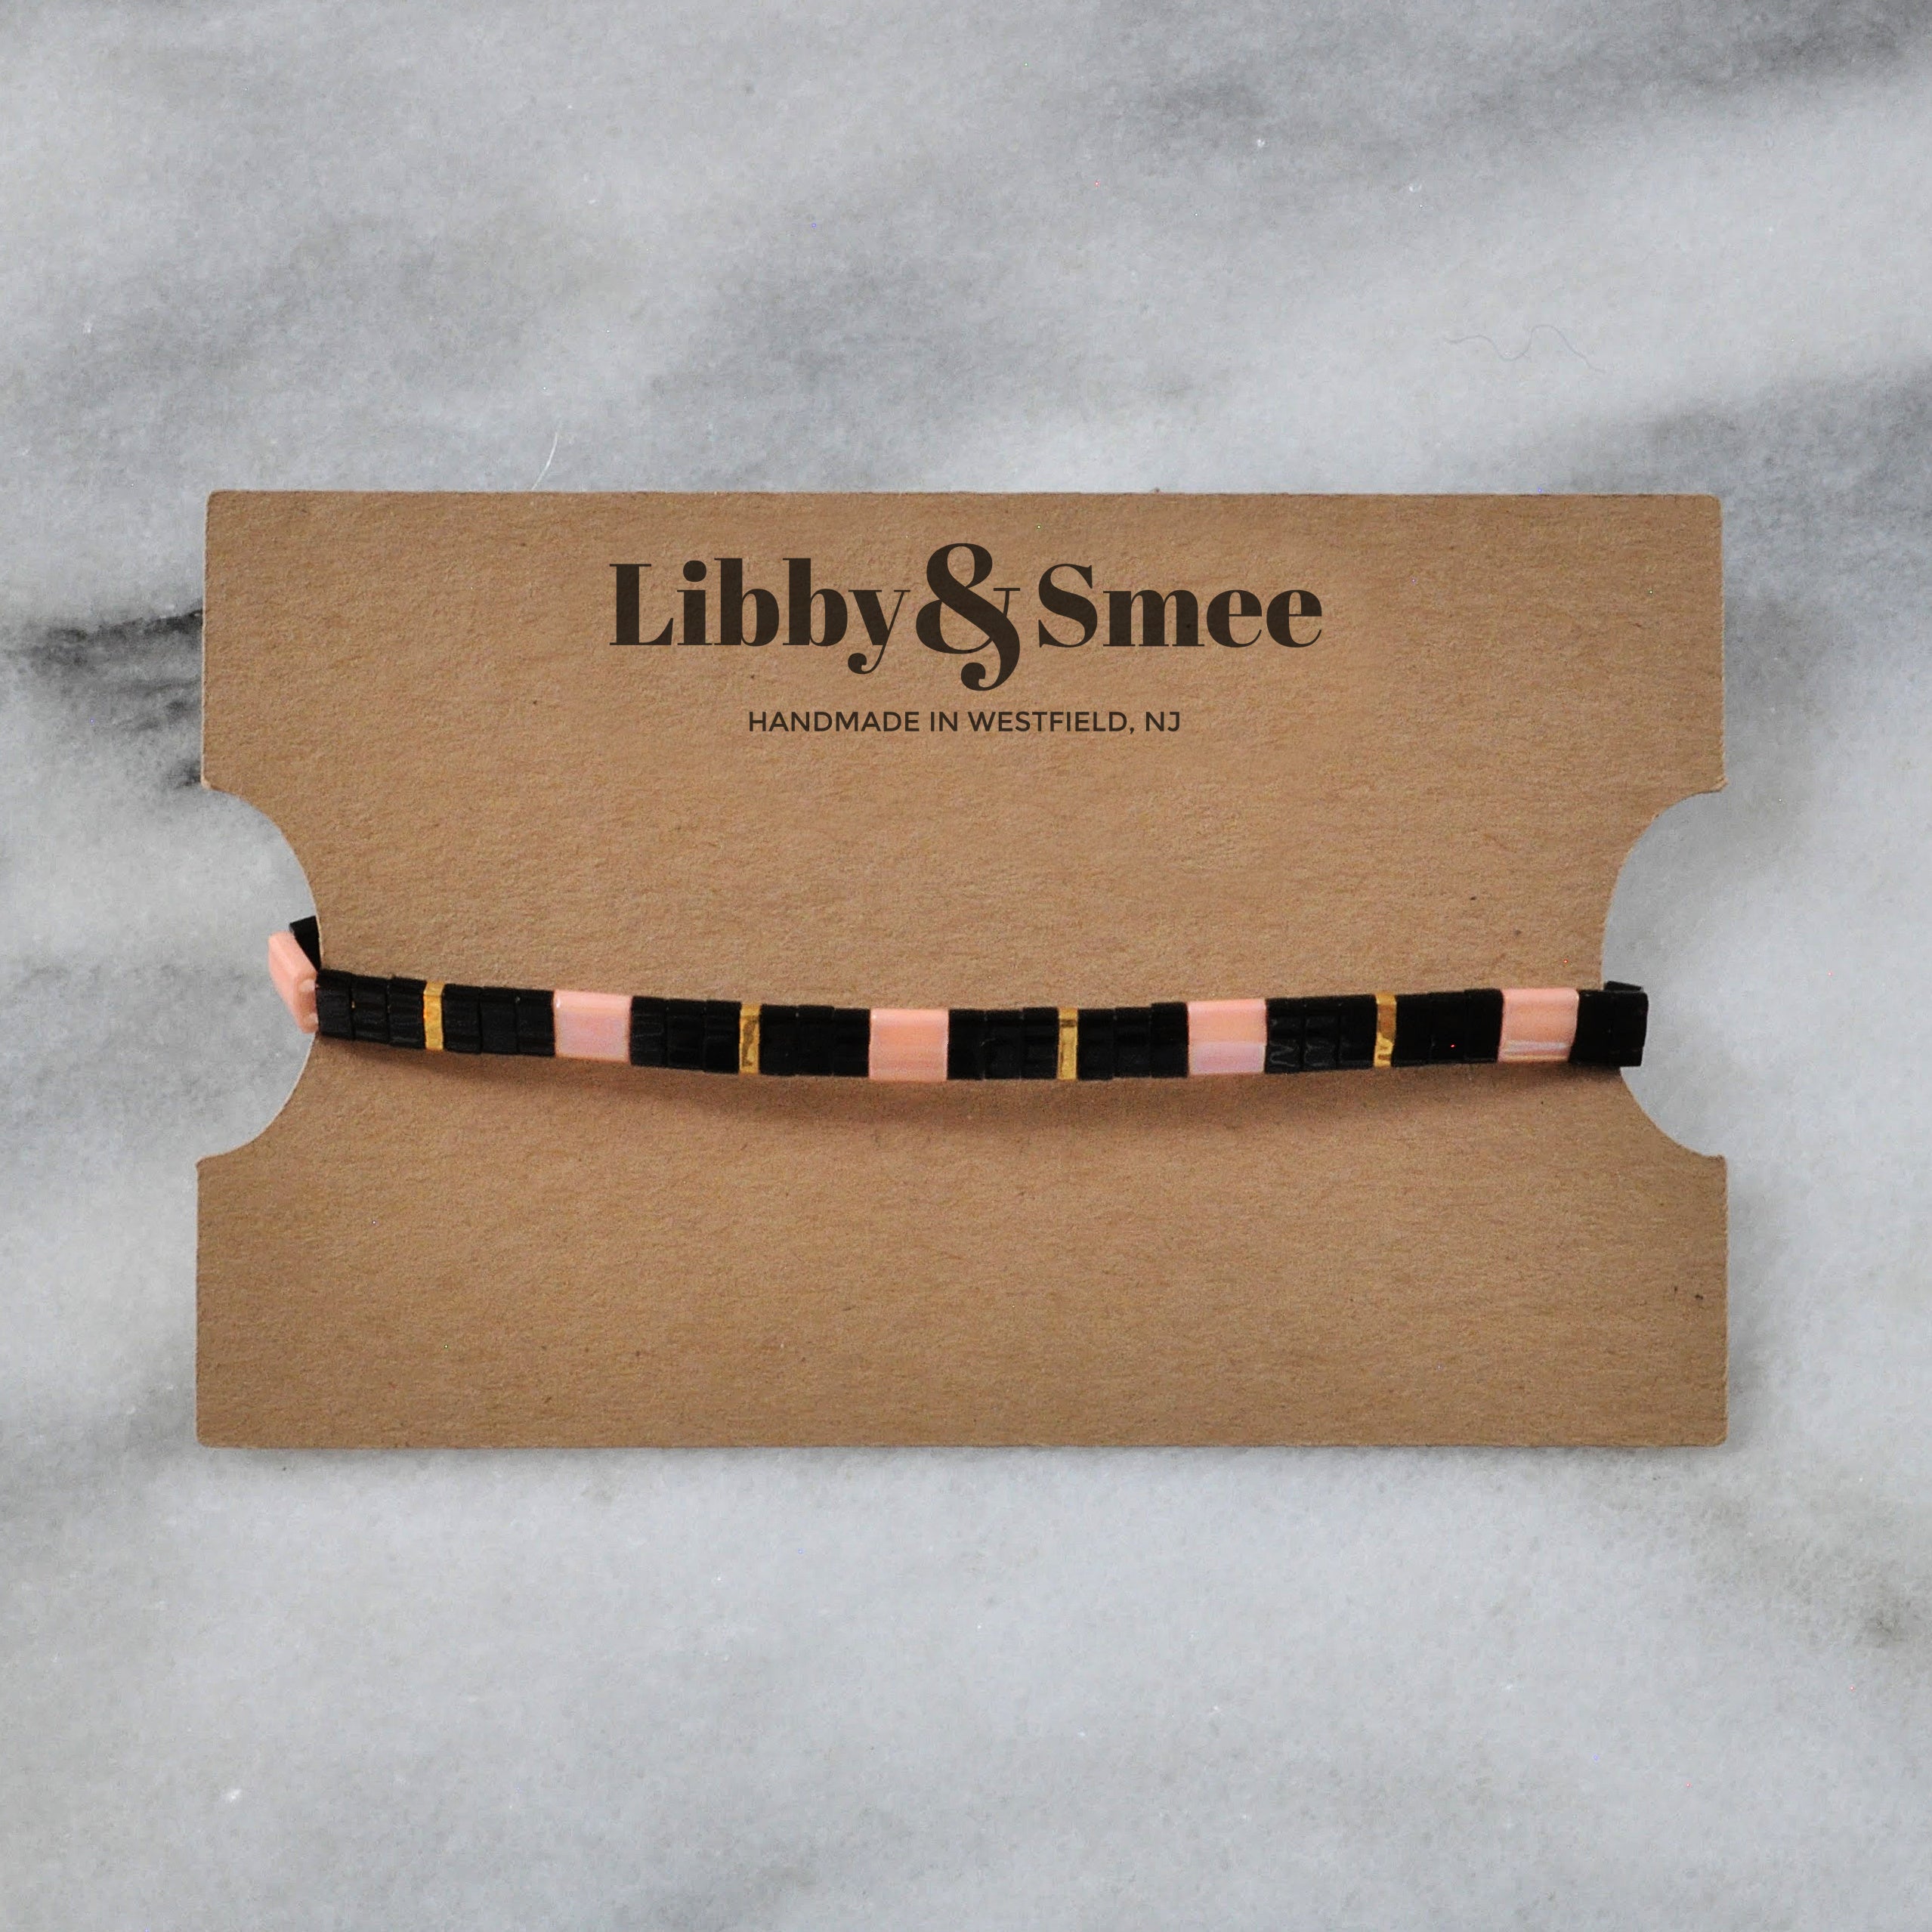 Libby & Smee stretch tile bracelet in Black Blush